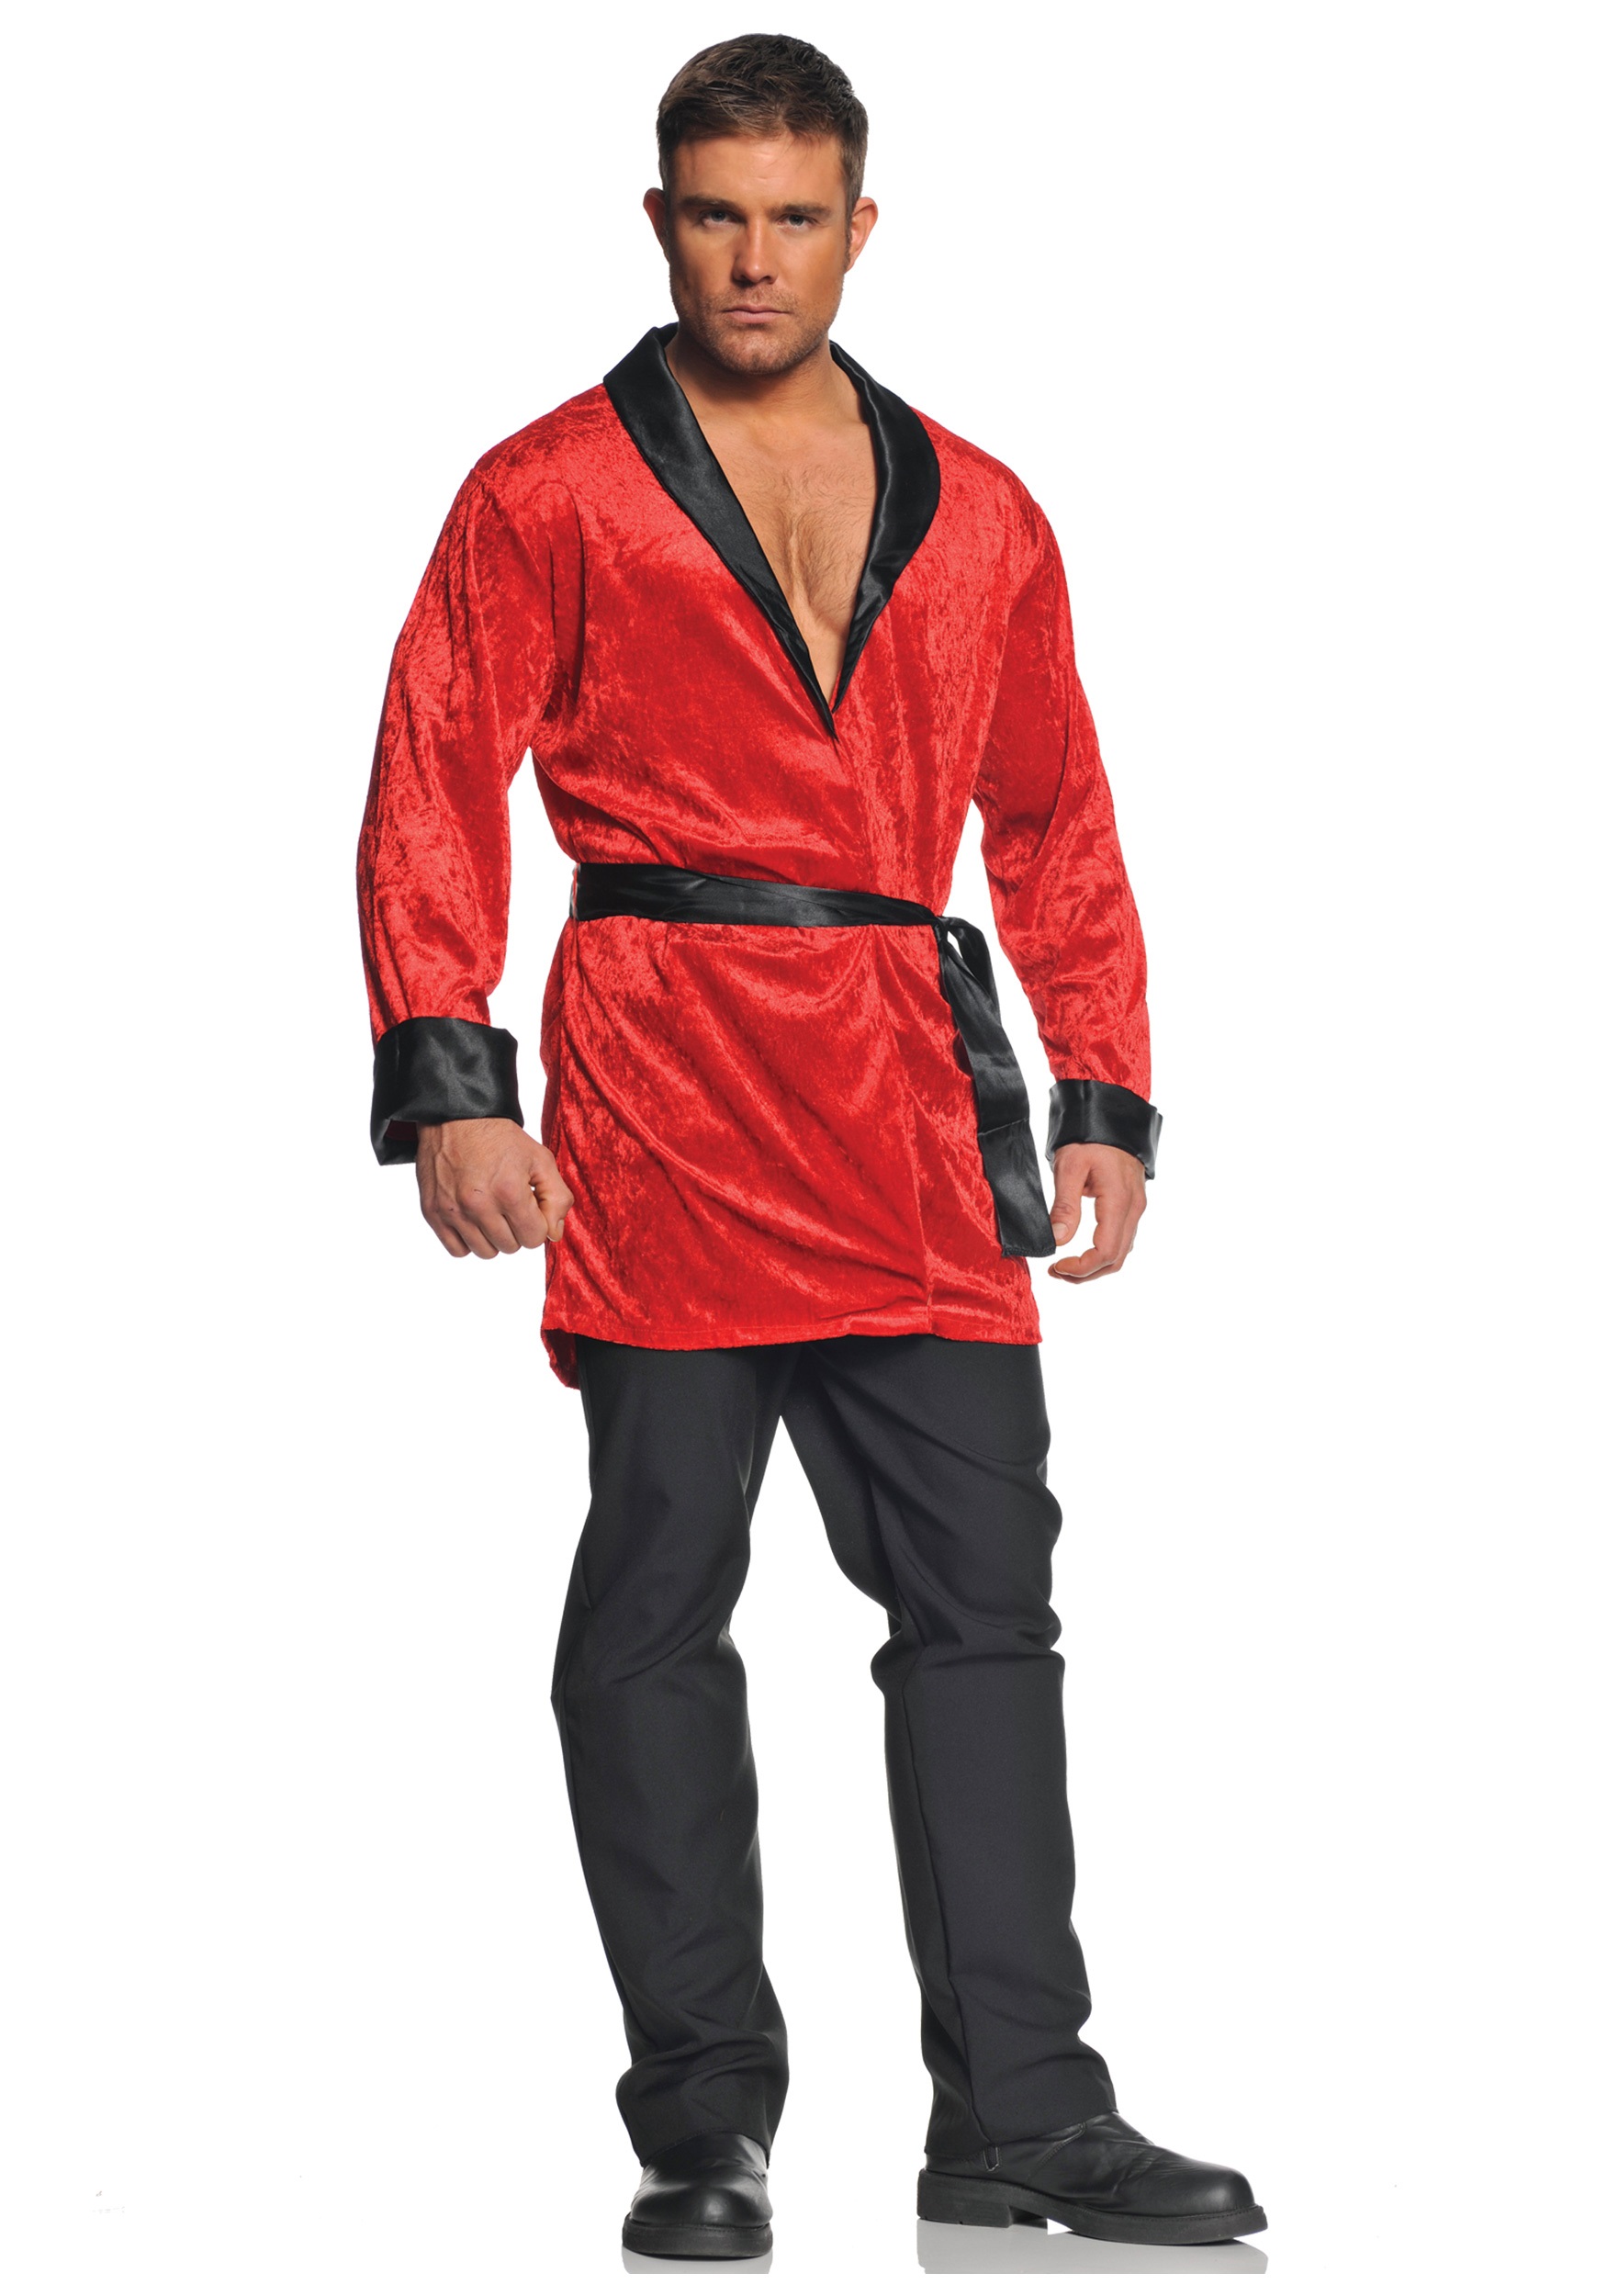 Red Smoking Jacket Fancy Dress Costume For Men , Playboy Mens Fancy Dress Costume , Hustle Jacket